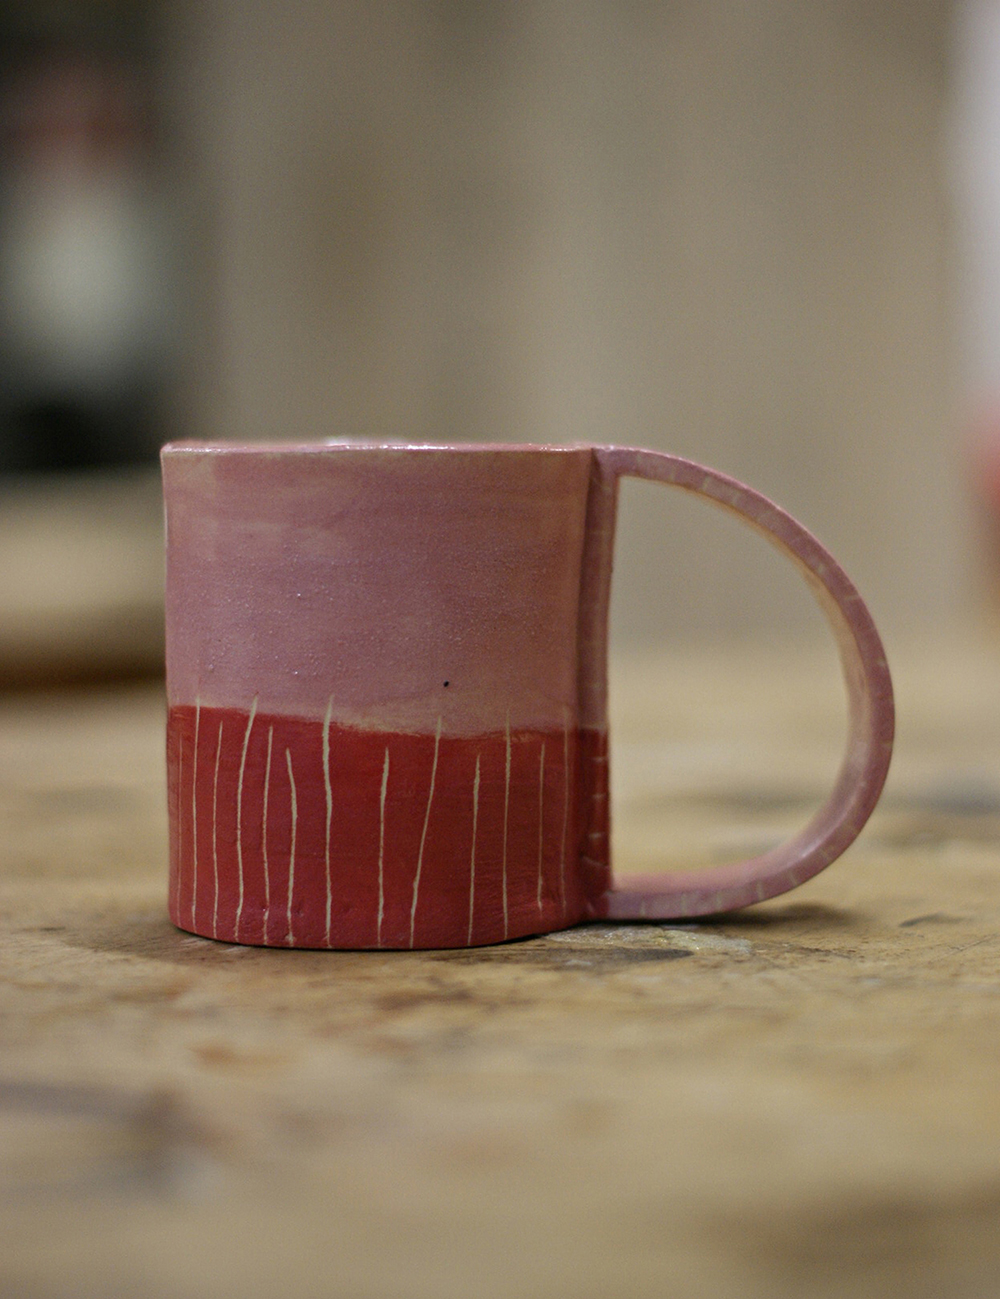 Make your ceramic mug workship Valencia